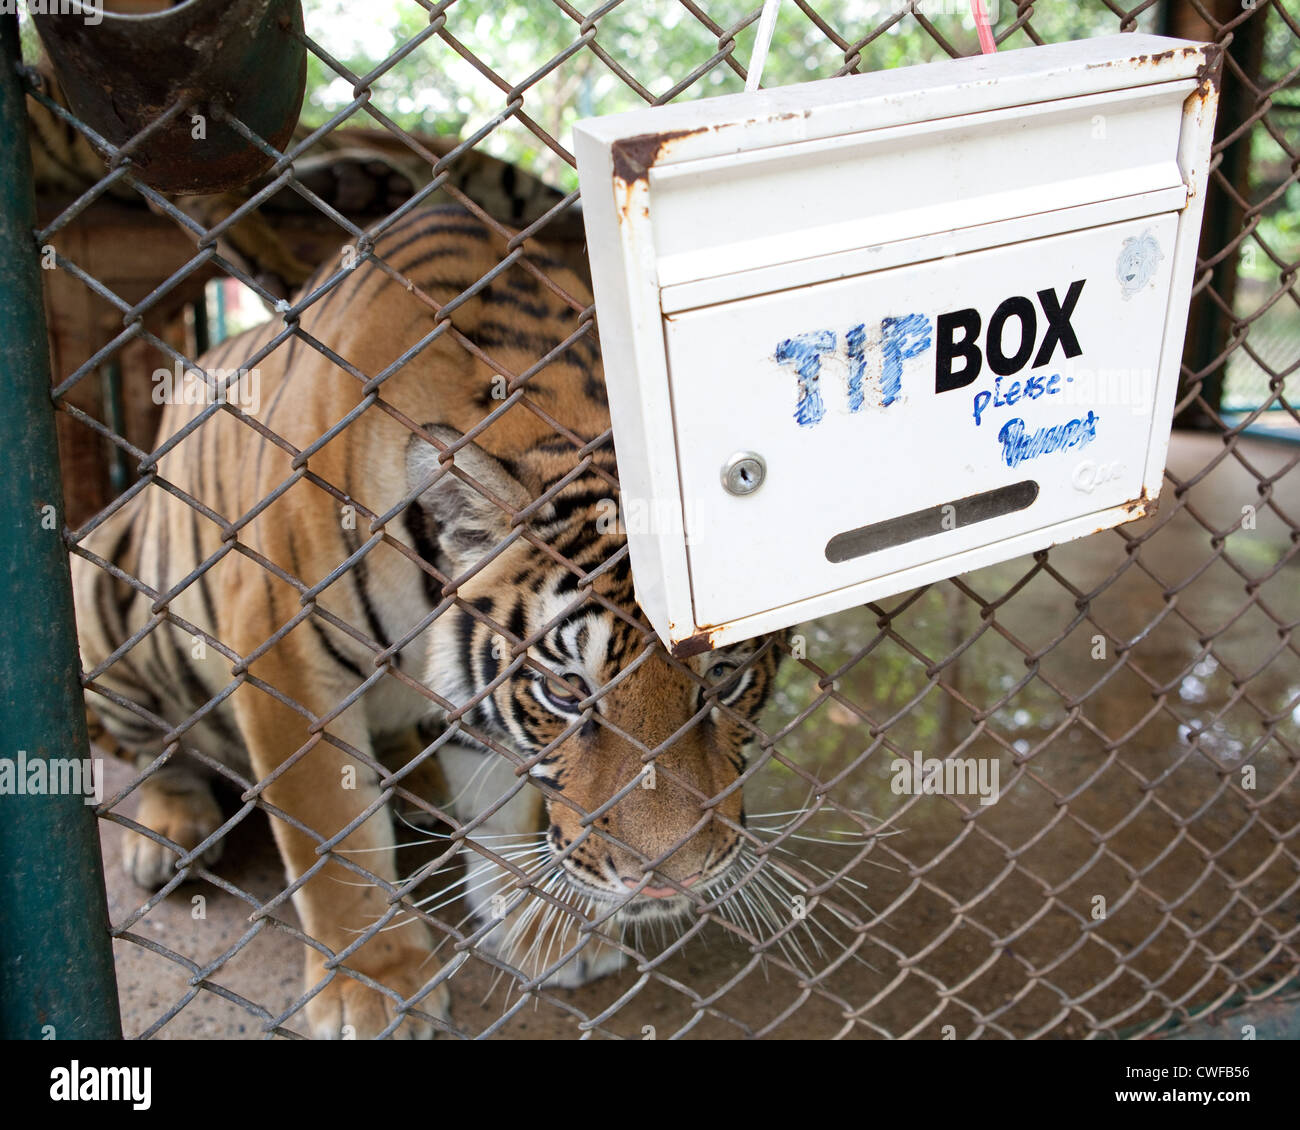 Tiger kingdom, Chiang Mai, Thailand Stock Photo